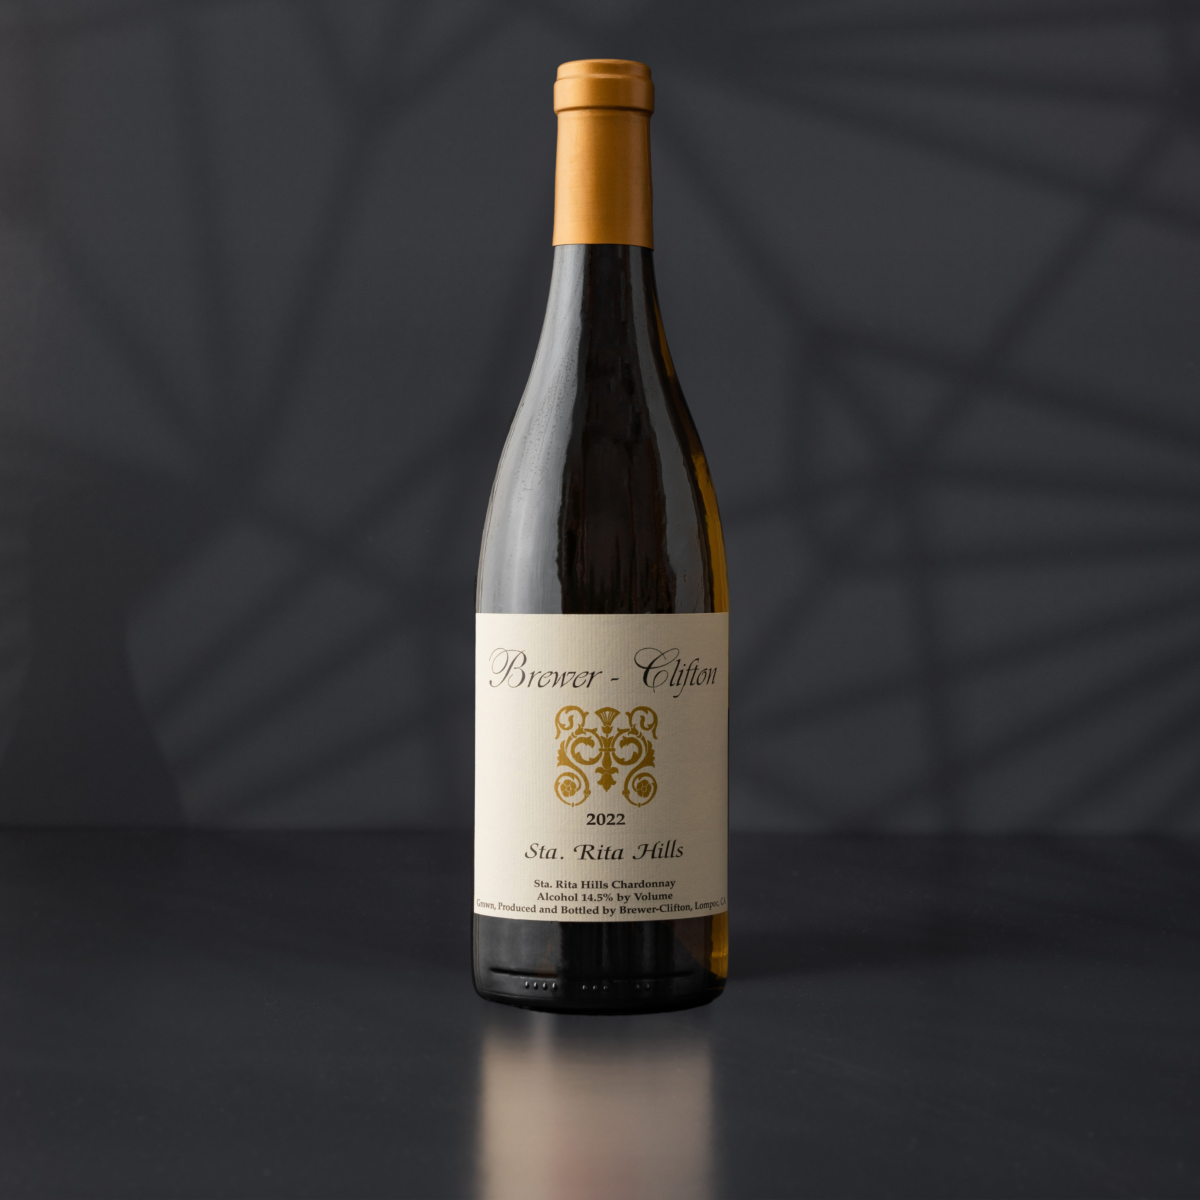 A bottle of 2022 Sta. Rita Hills Chardonnay